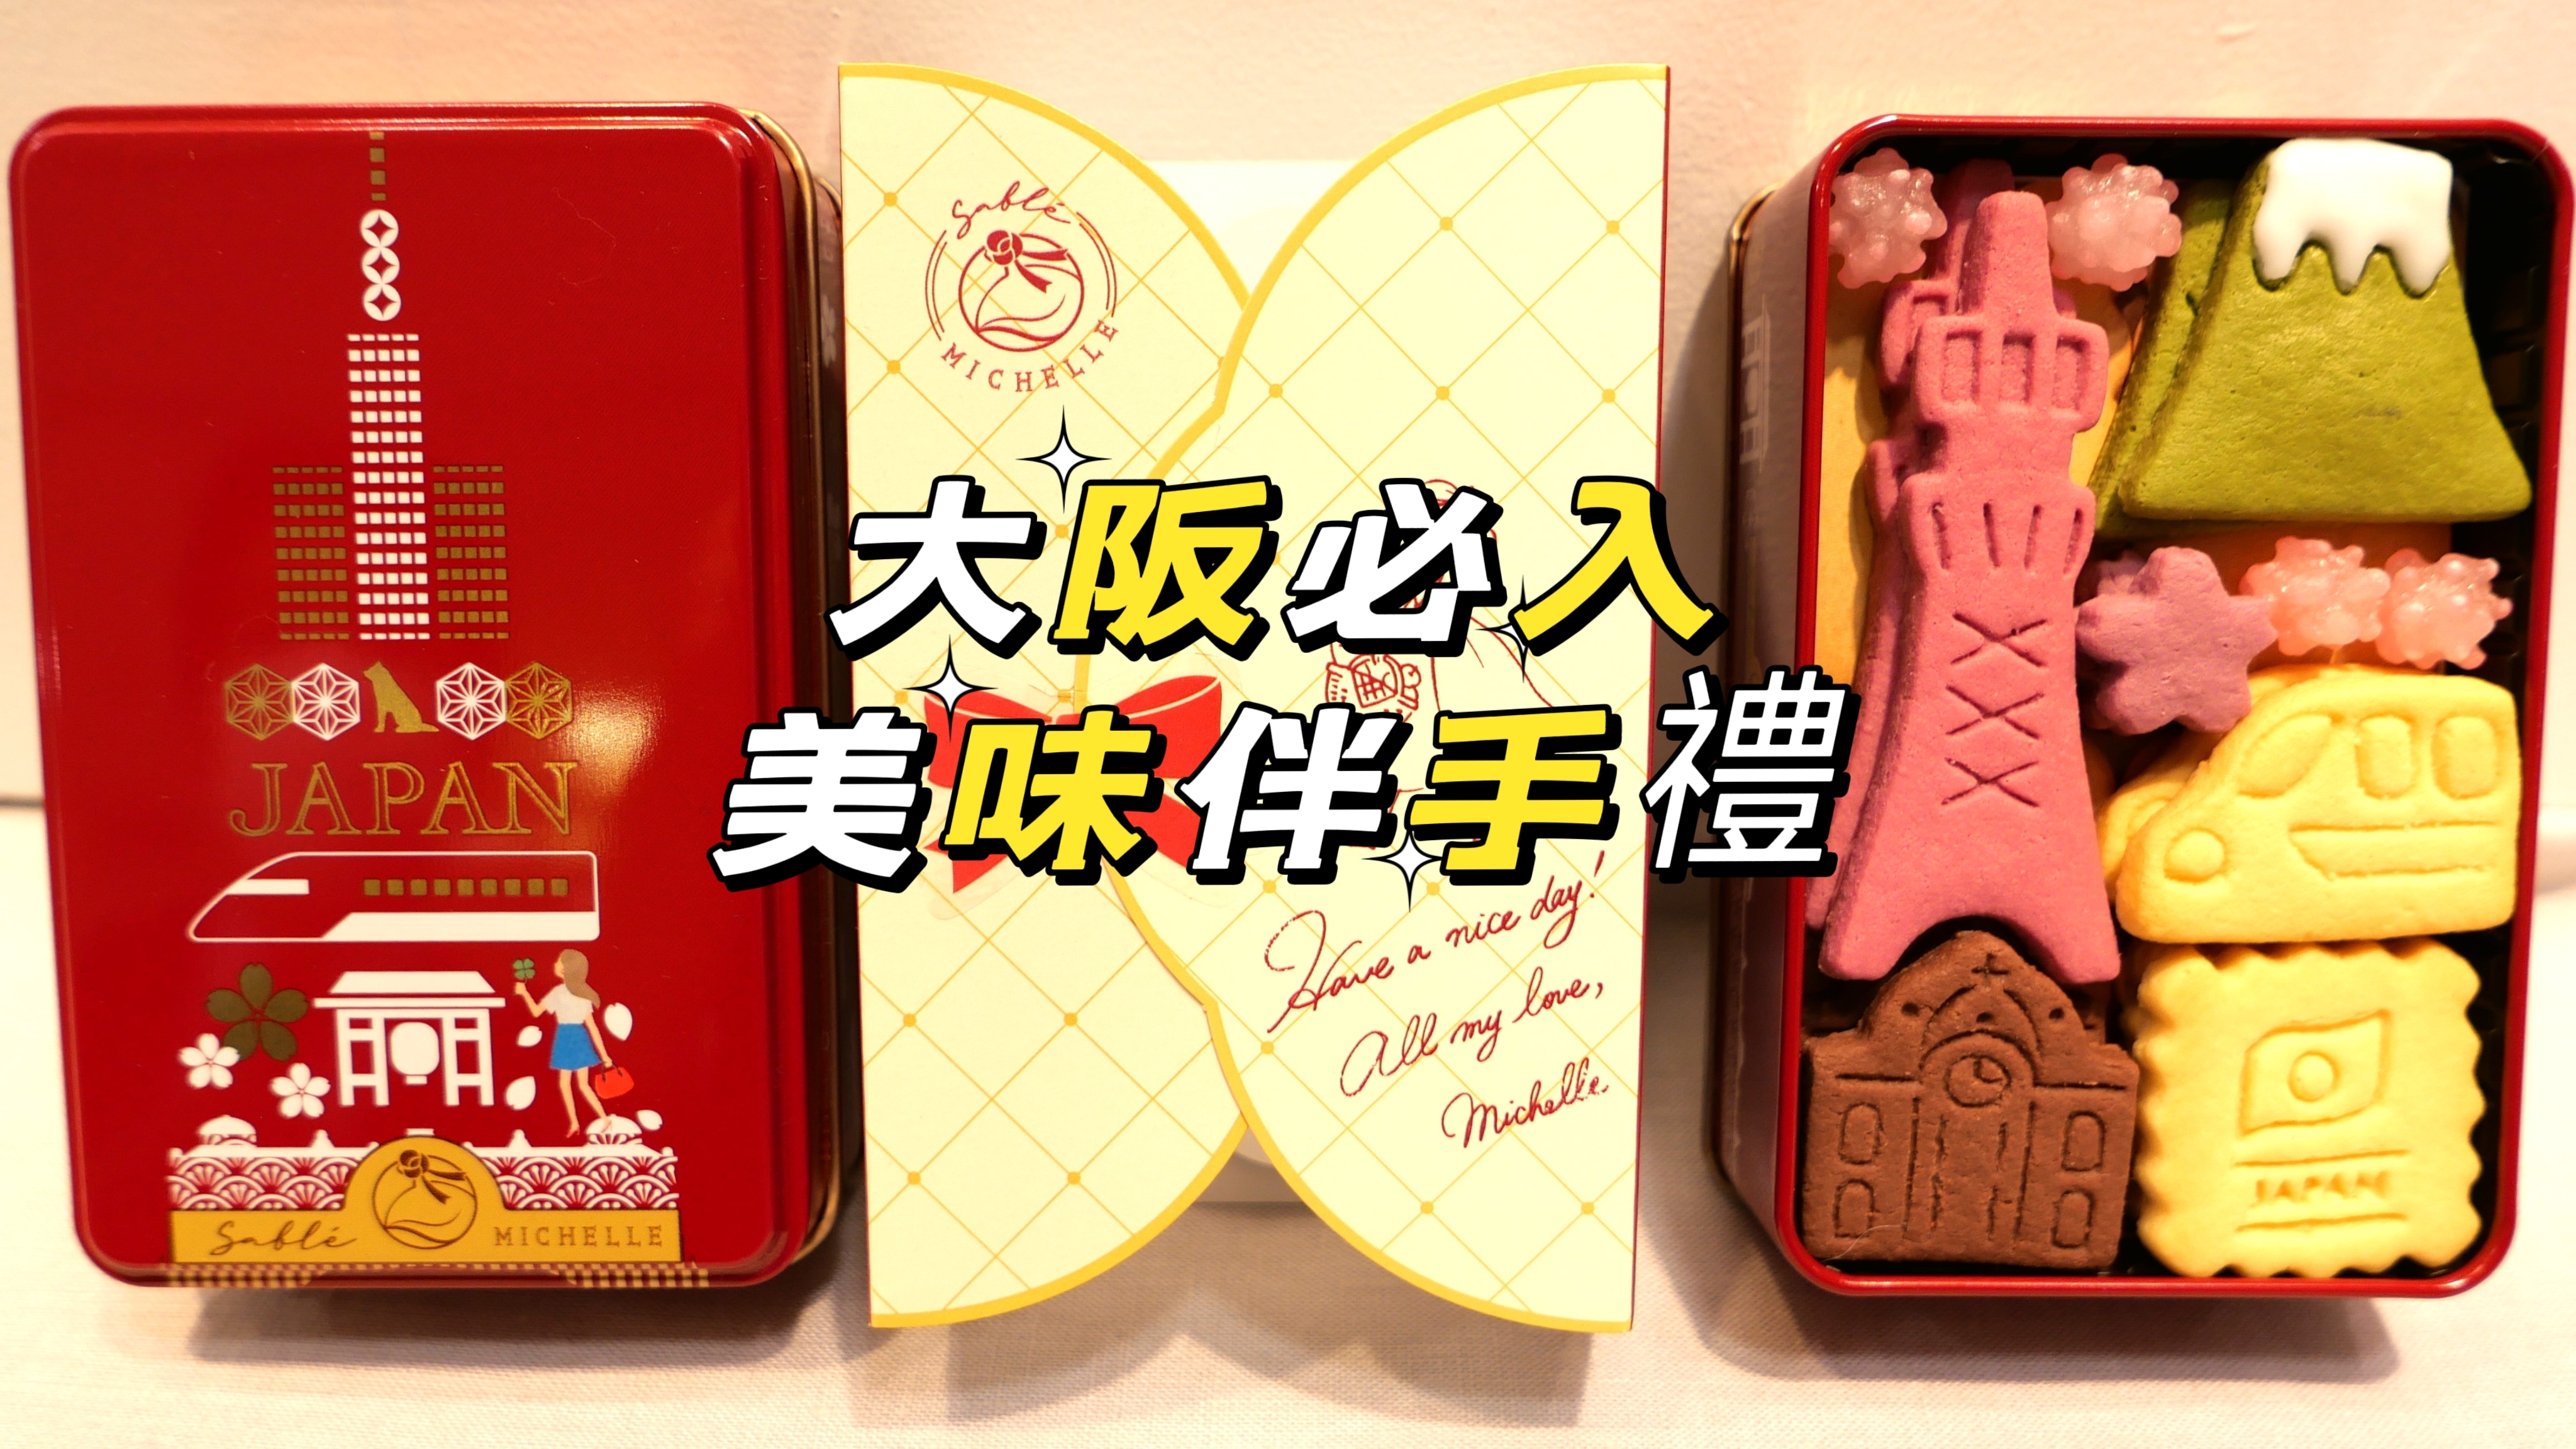 Daimaru Fujii Central: Top 6 Japanese Stationery Souvenirs at